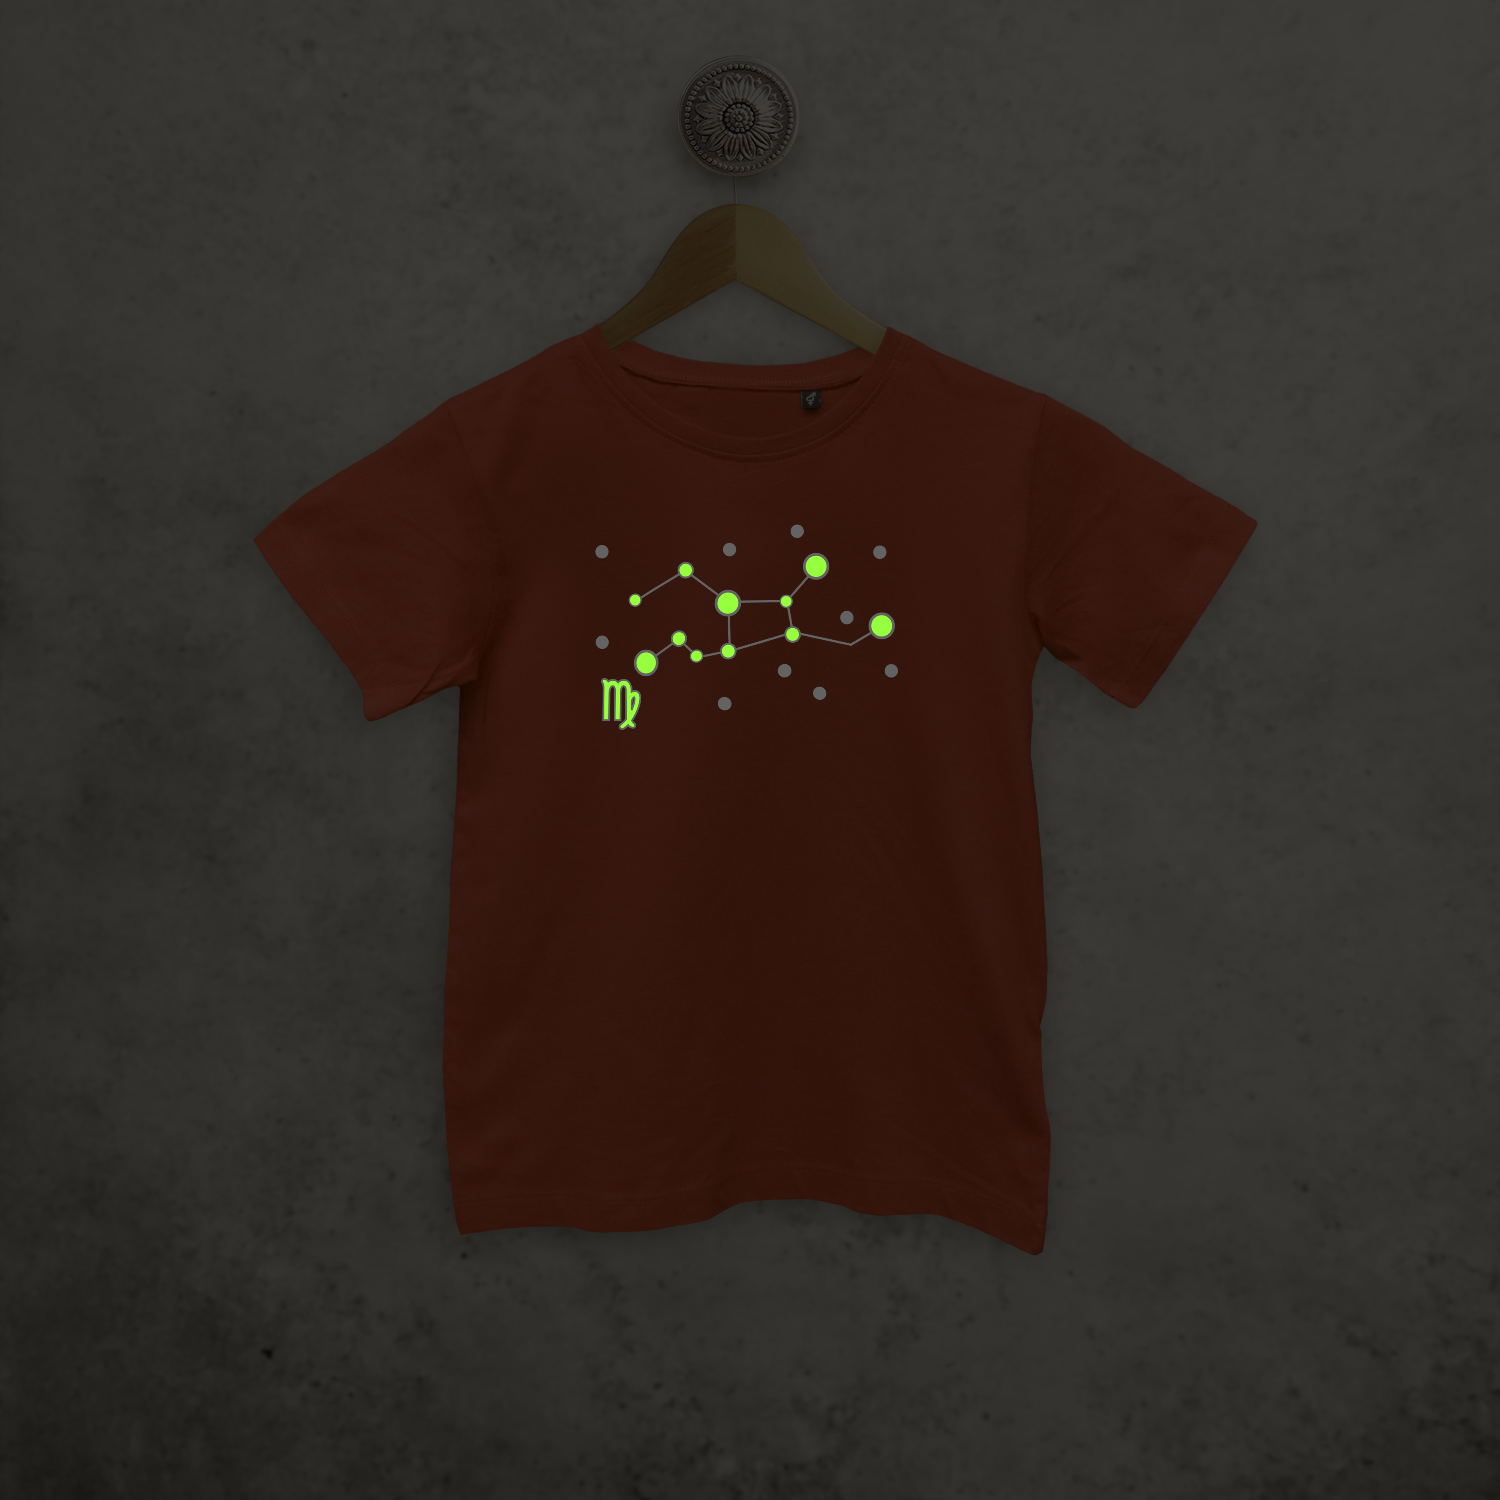 Star sign glow in the dark kids shortsleeve shirt